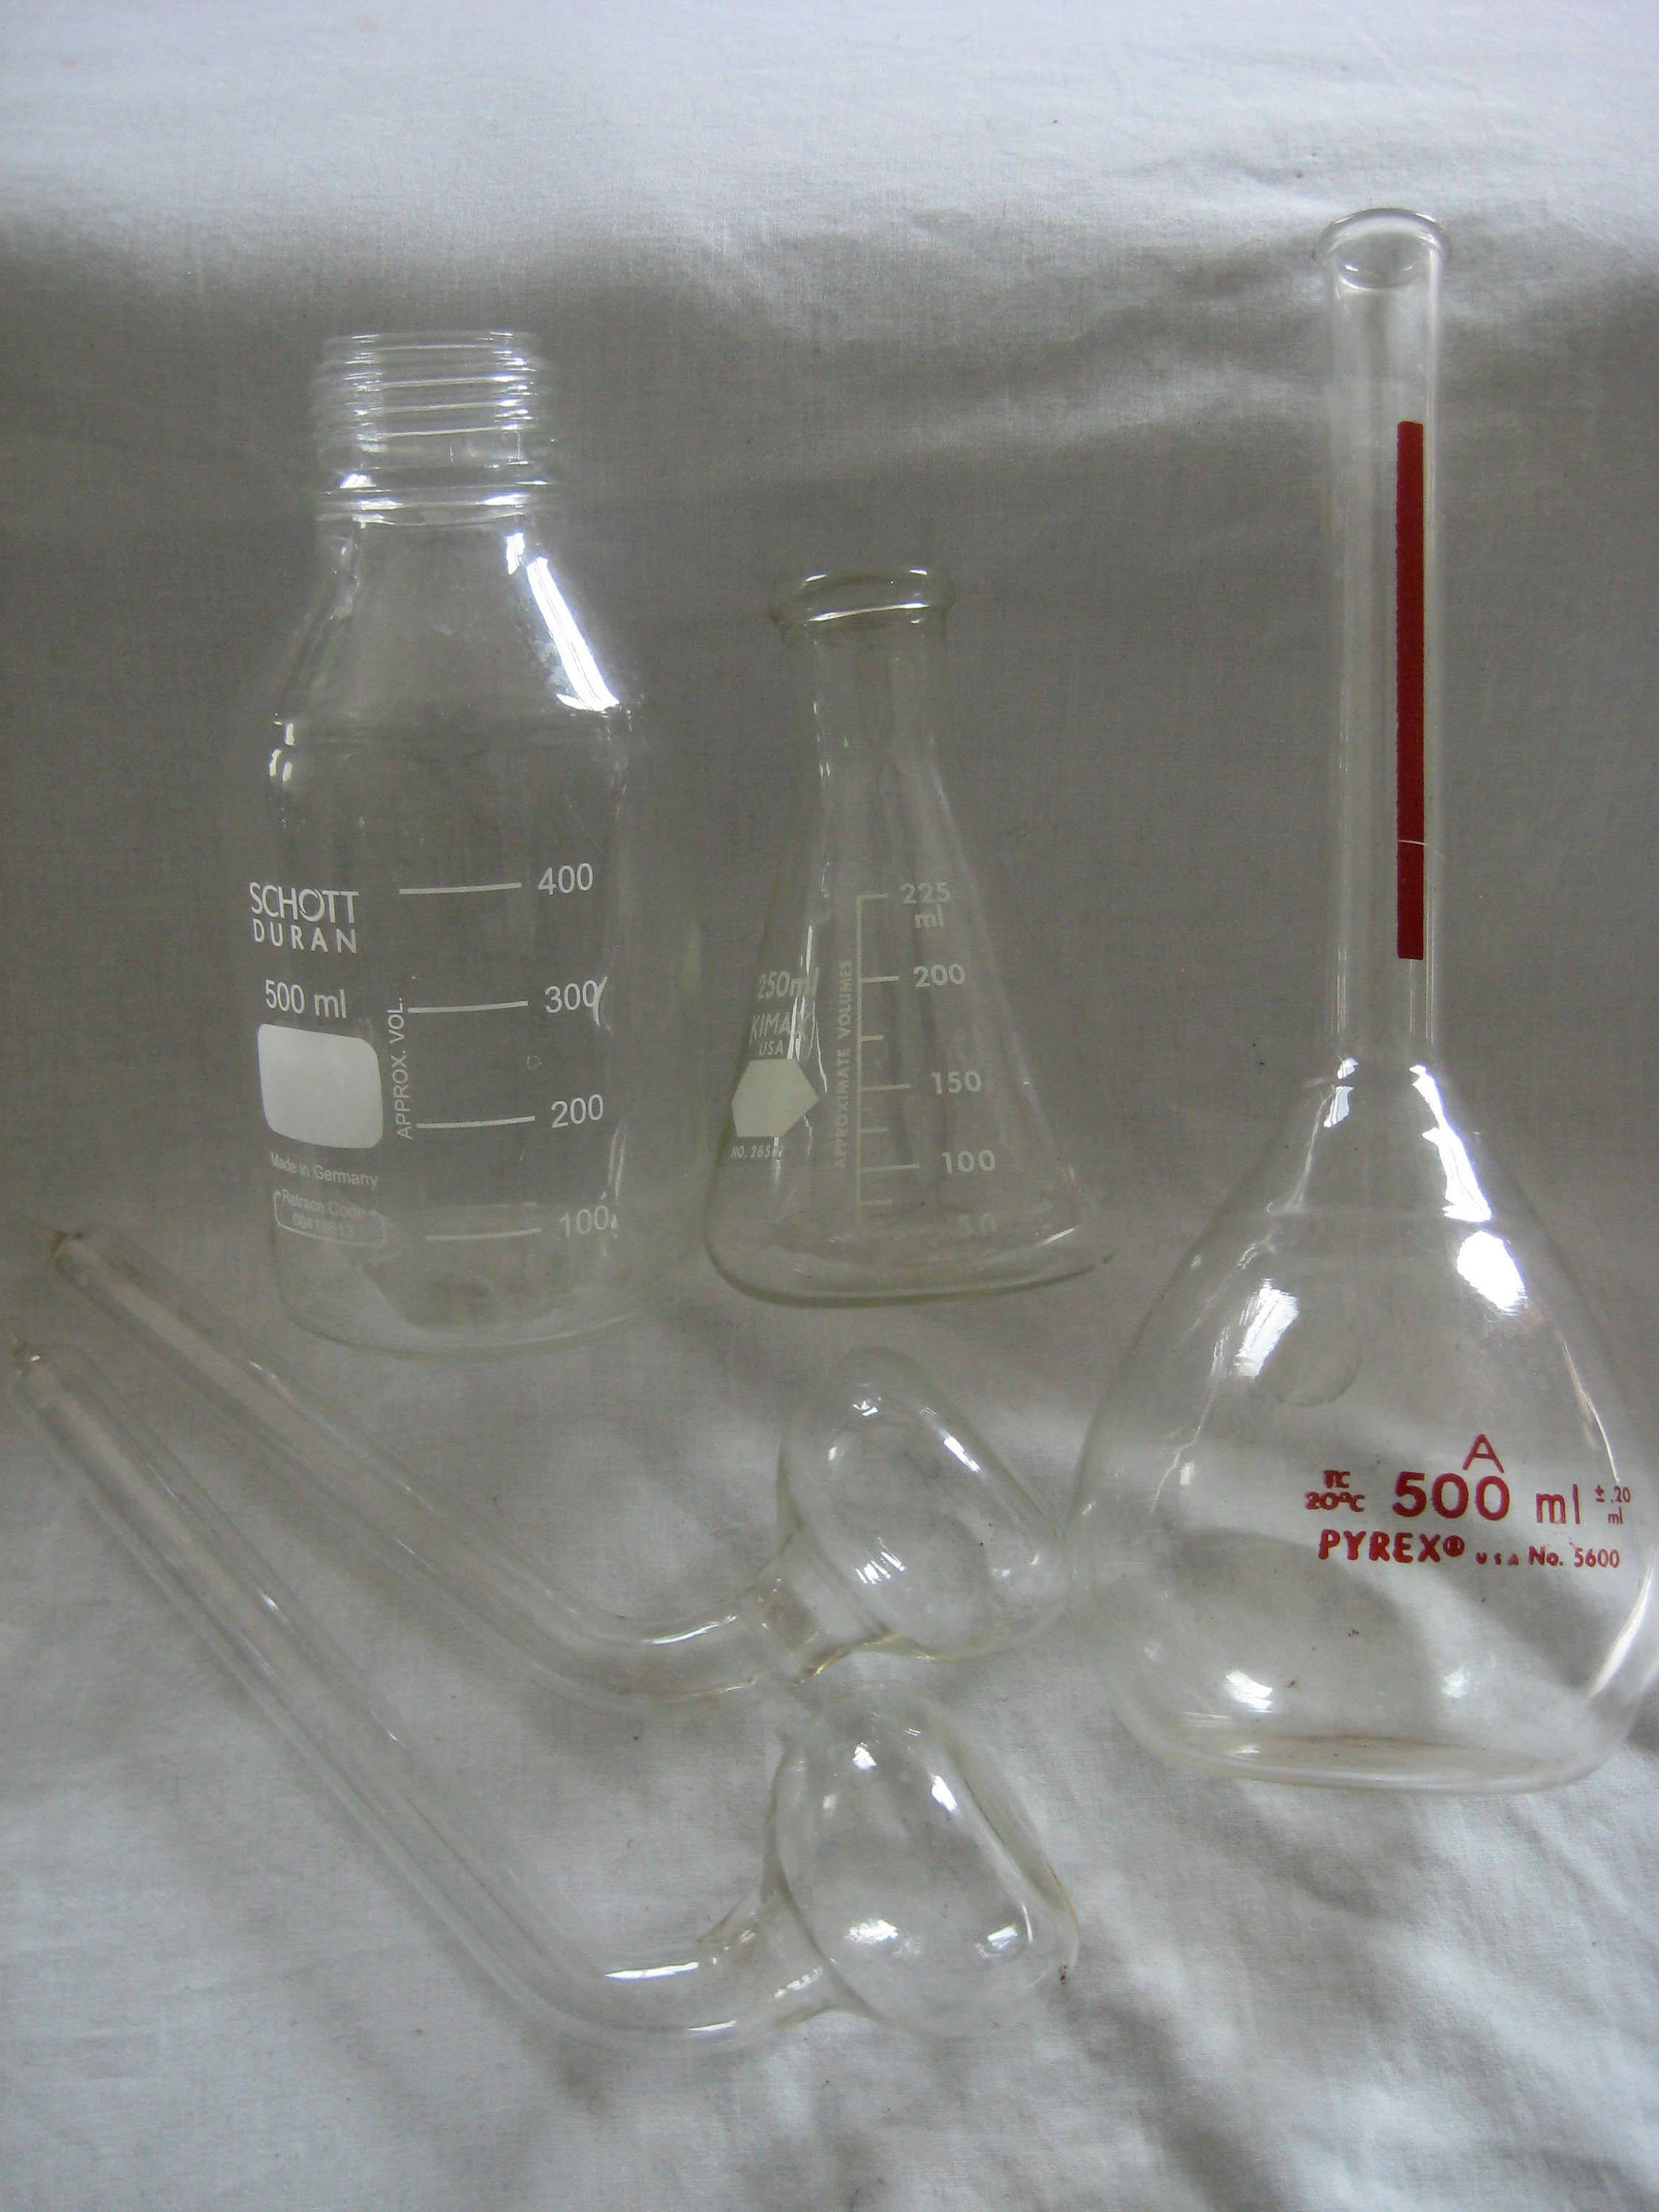 13 Nice Glass Bud Vase Tubes 2022 free download glass bud vase tubes of chemistry lab glassware pyrex 500 ml kimax 250 ml schott etsy inside dc29fc294c28ezoom